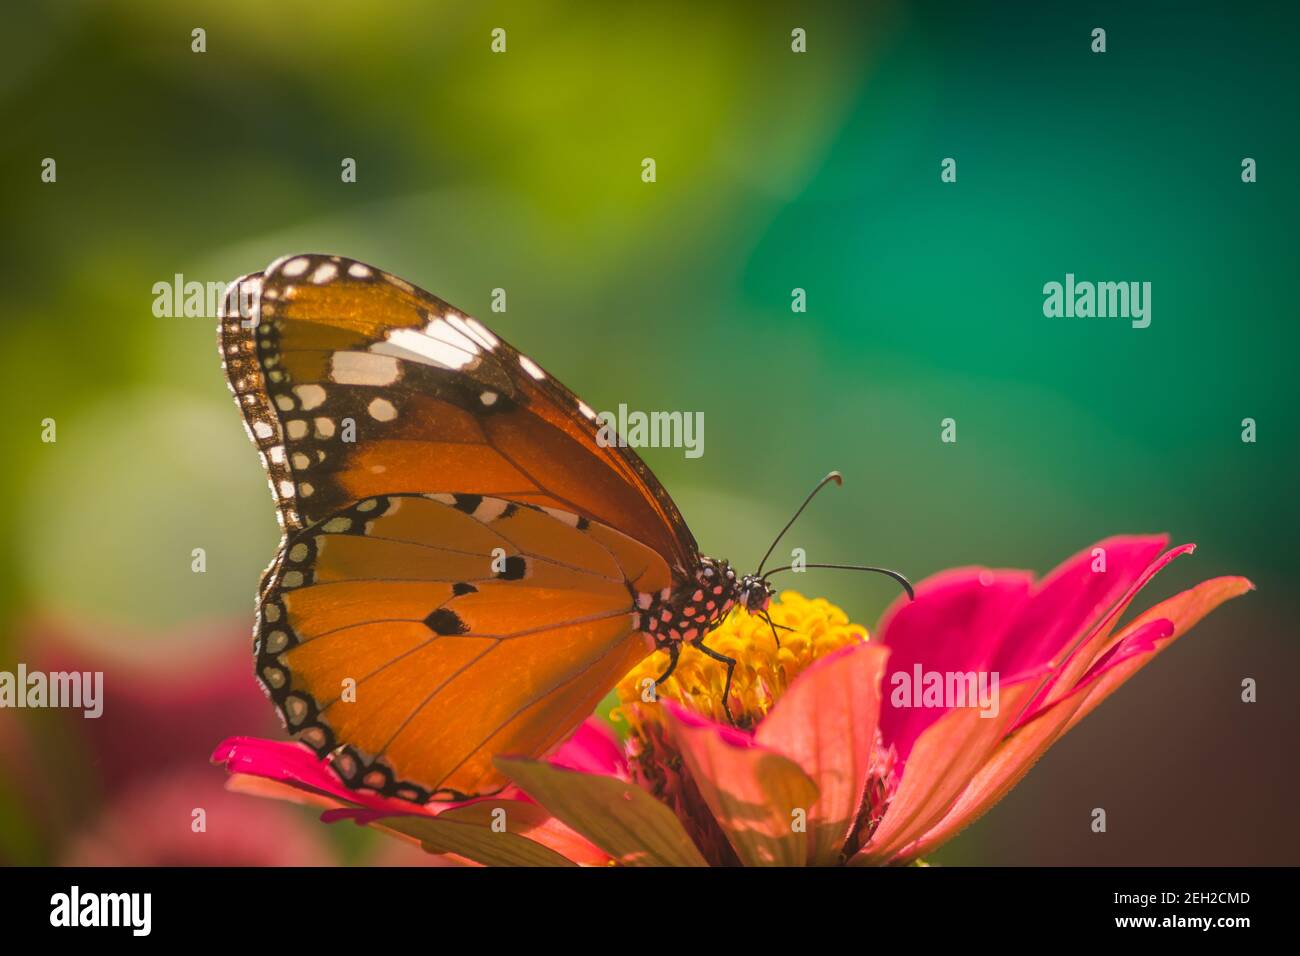 Monarch Butterfly On Daisy Flower In The Garden Stock Photo